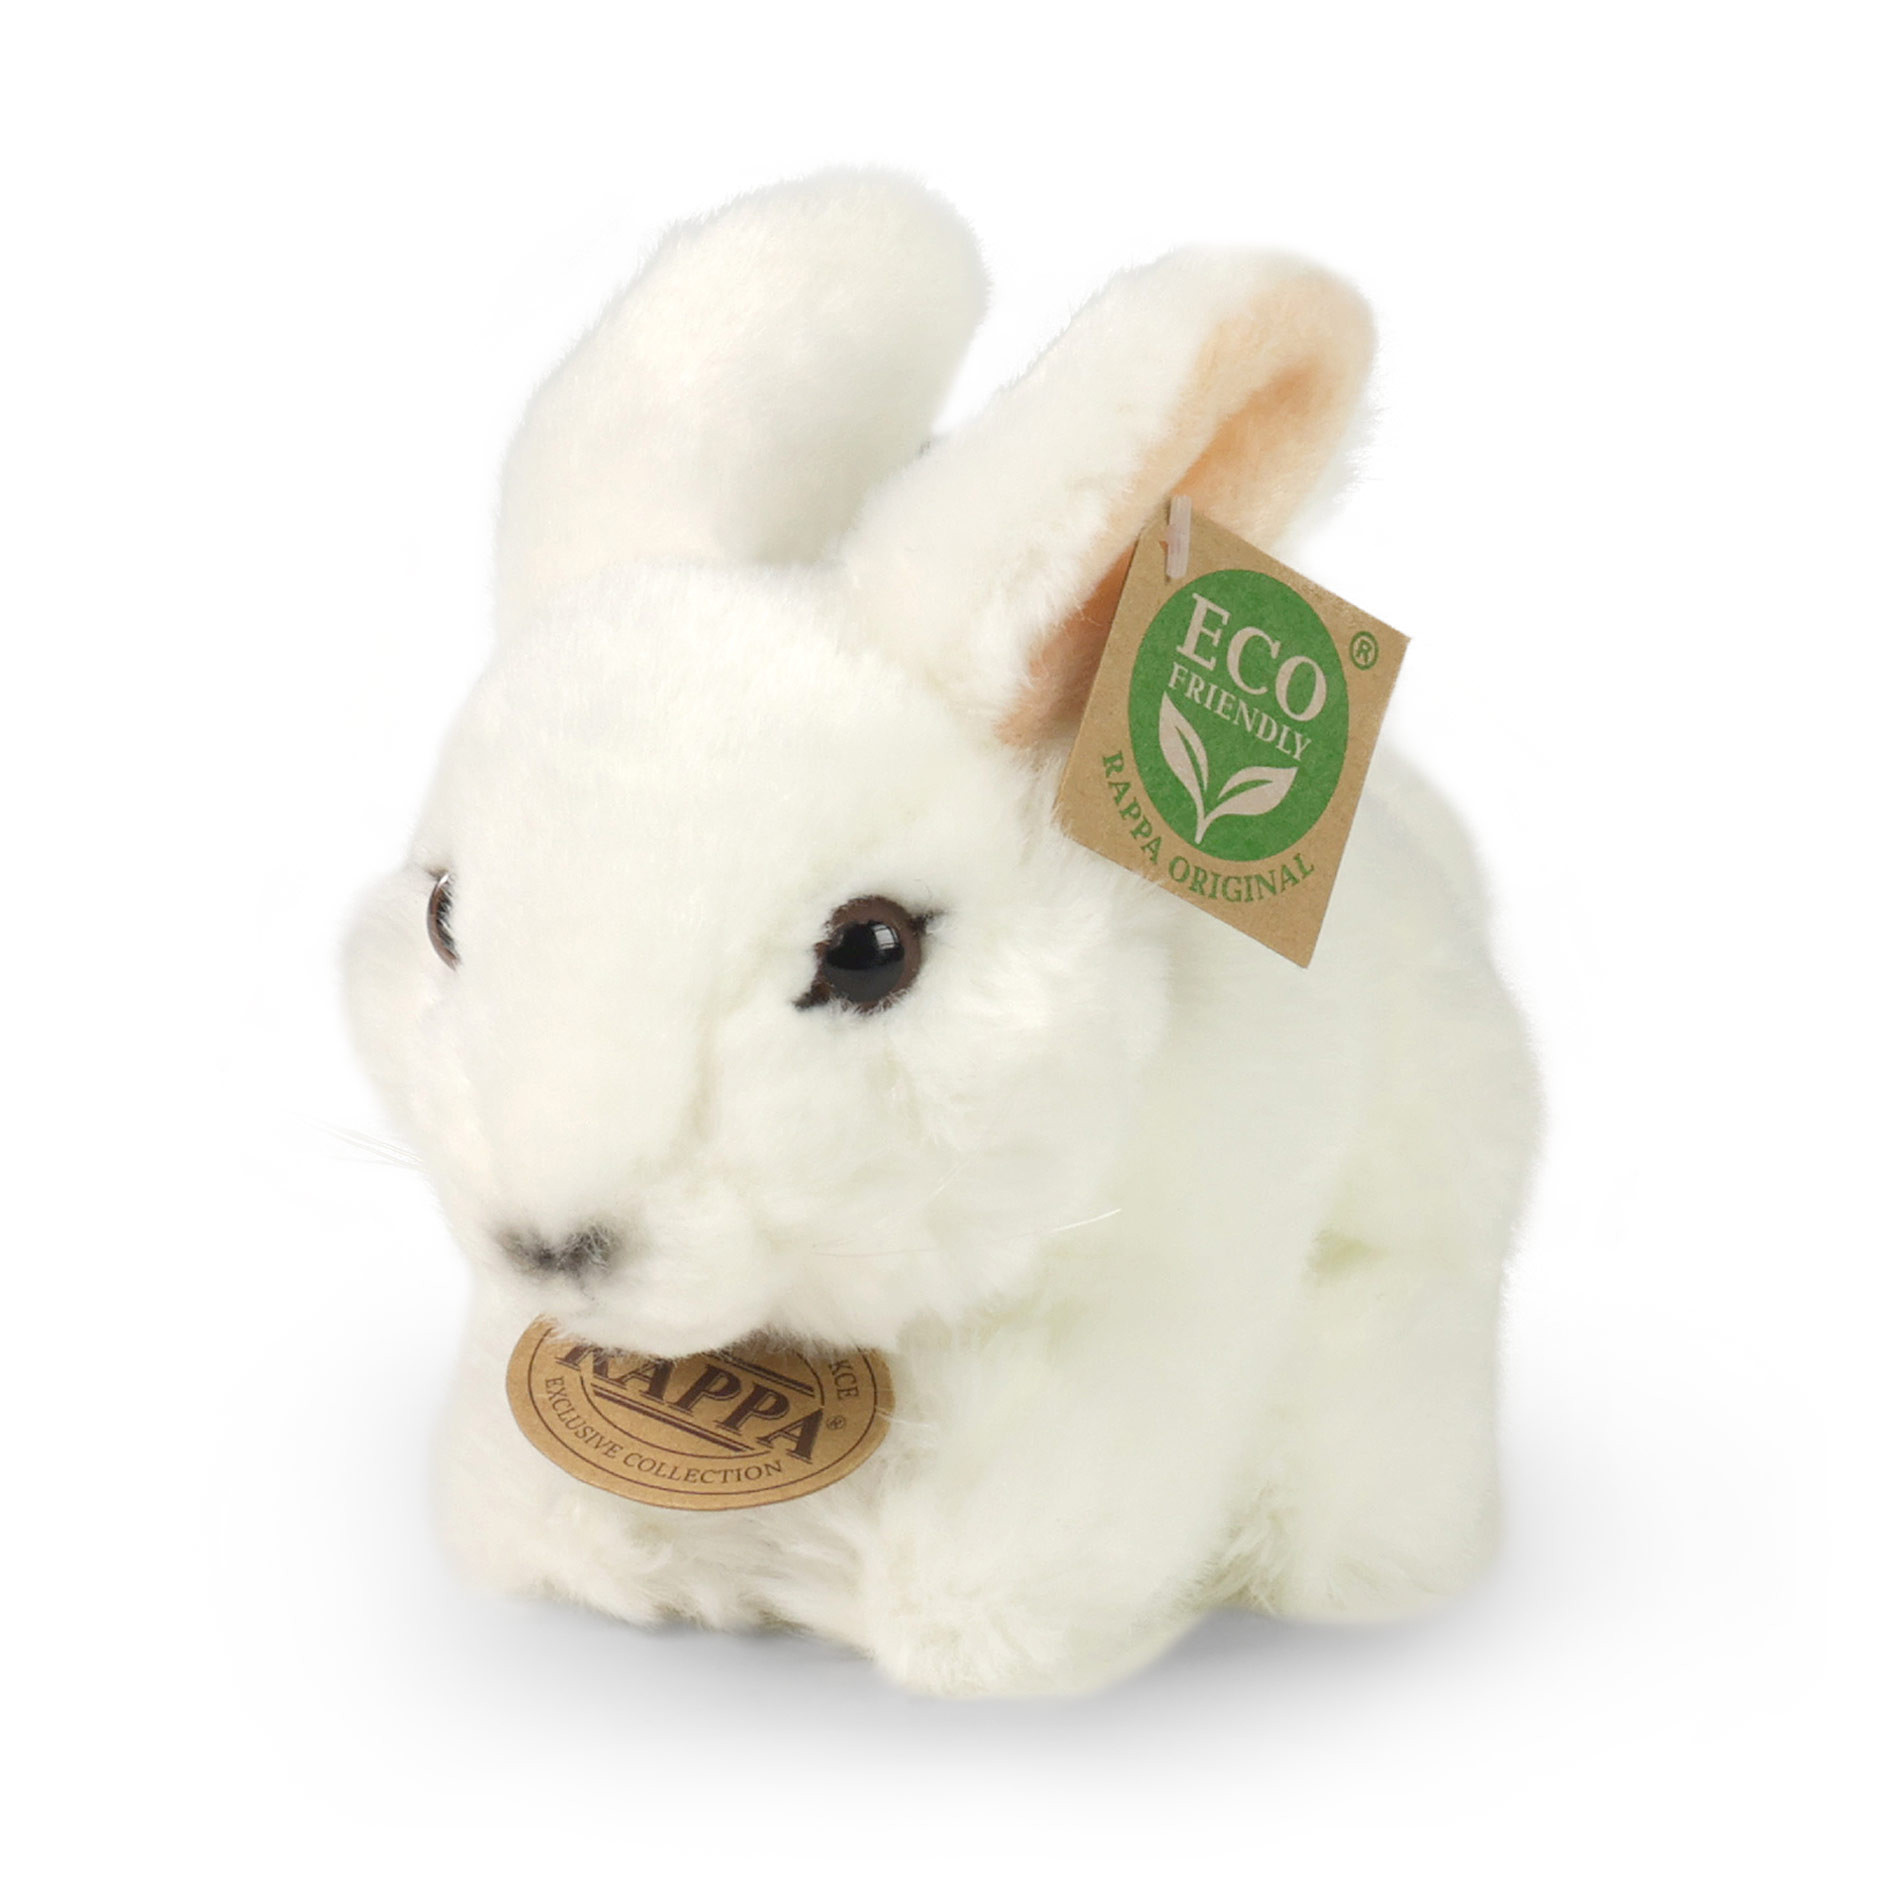 Plush rabbit 18 cm ECO-FRIENDLY